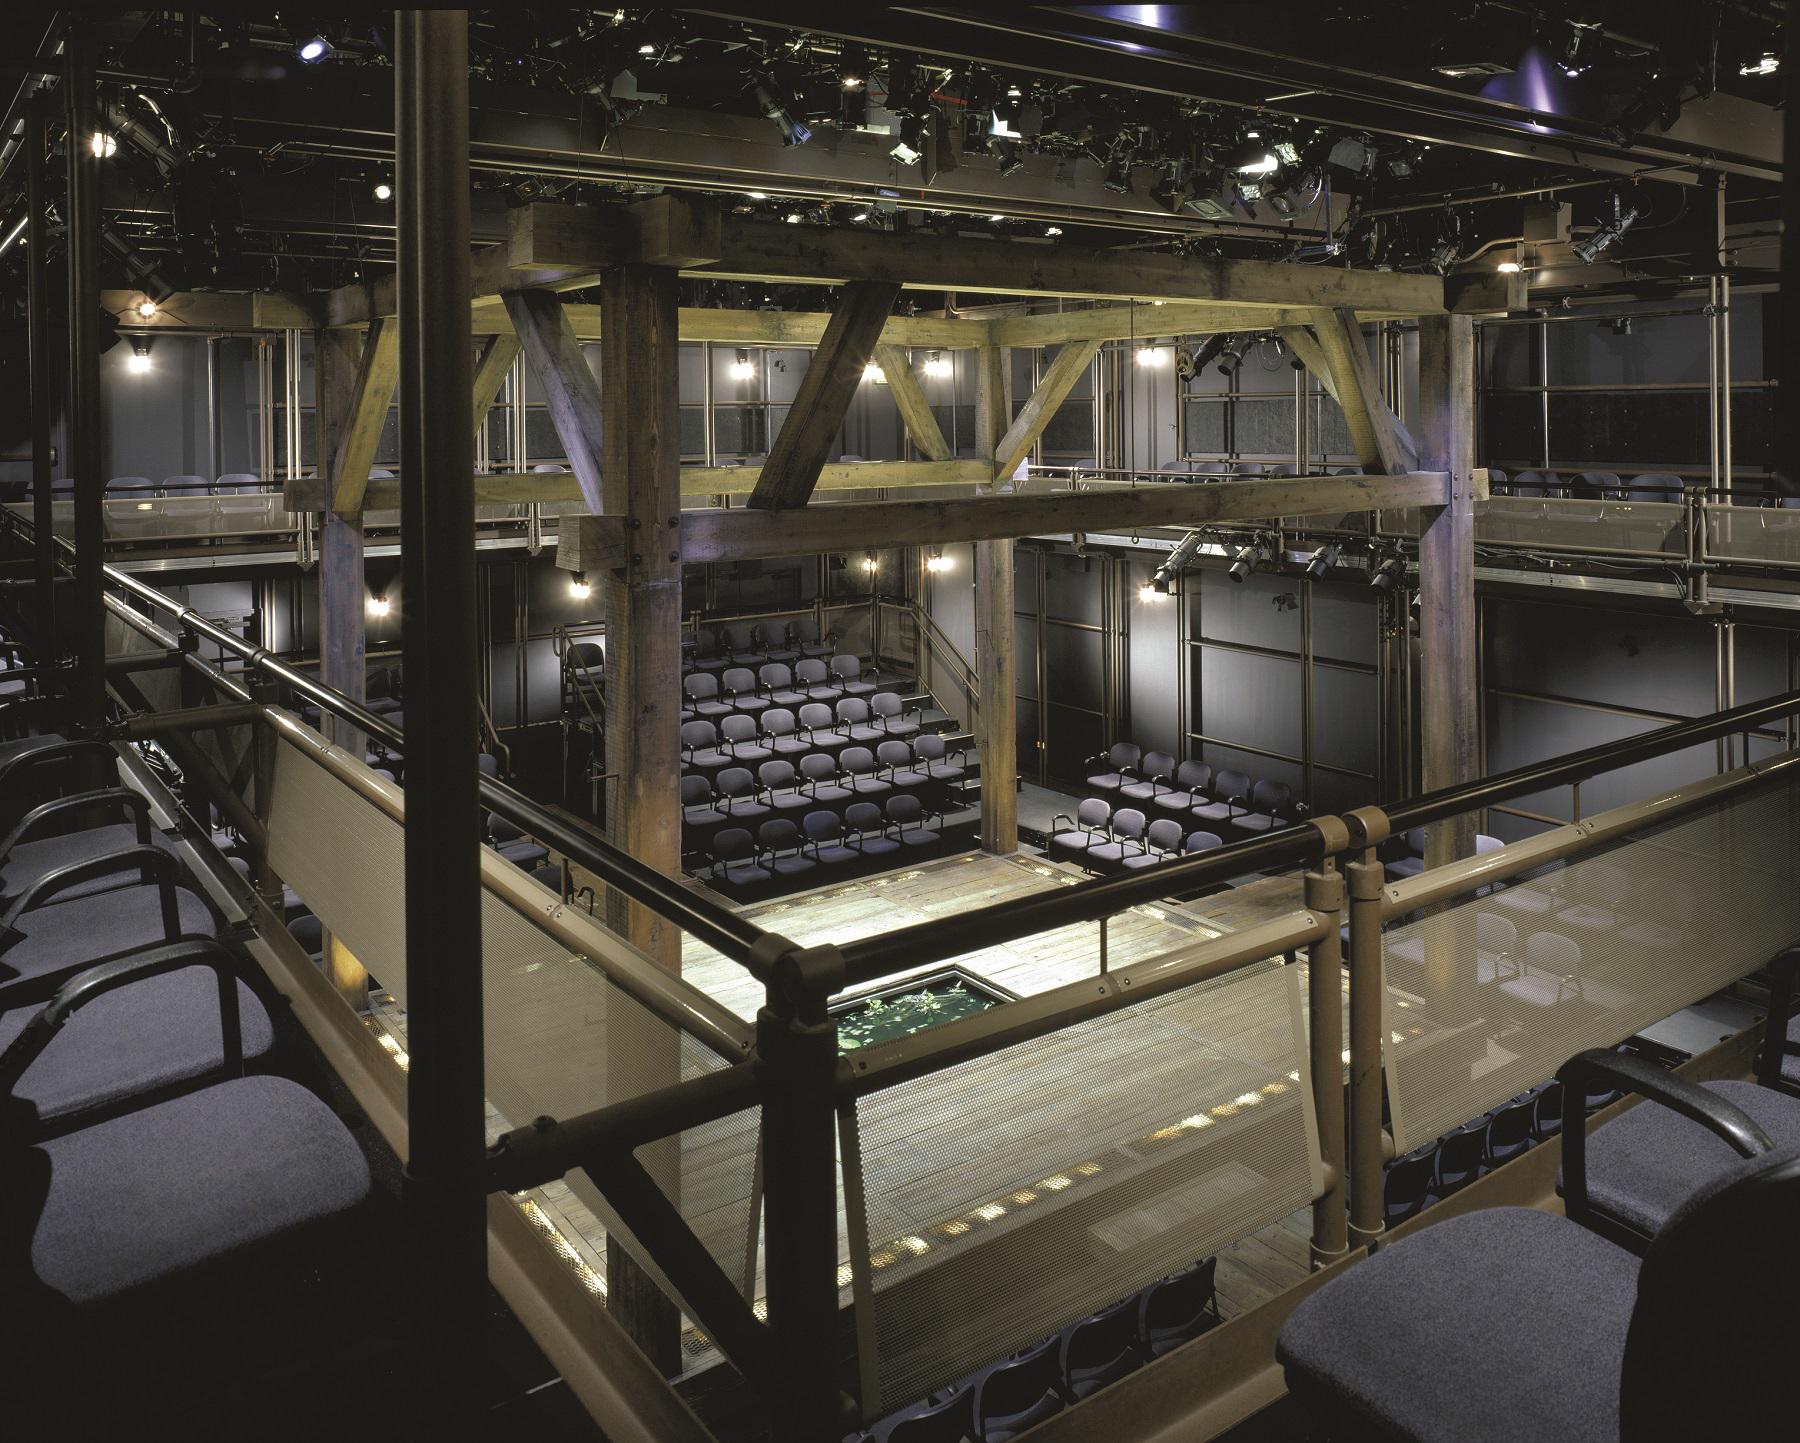 Looking Glass Theater Mesh Railings & Seating Riser